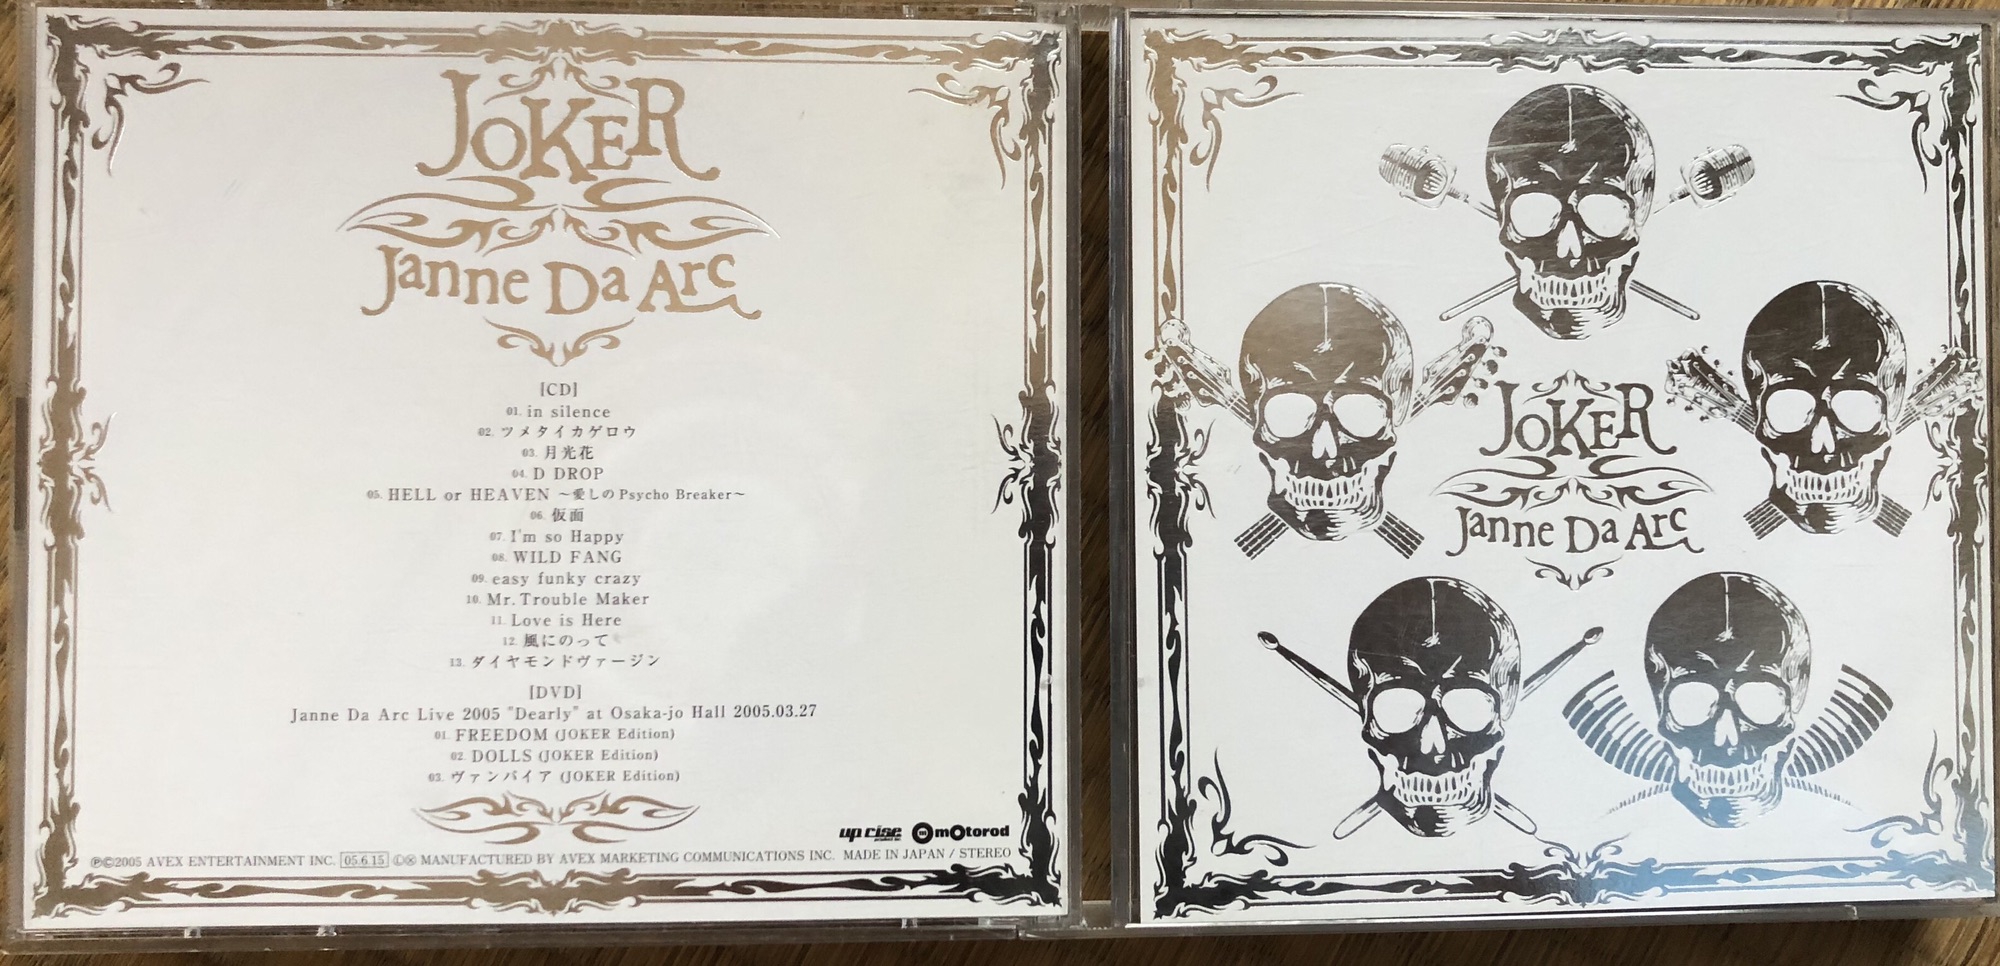 6th album〝JOKER〟 | Janne Da Arc discography 〝LEGEND OF DREAMERS 